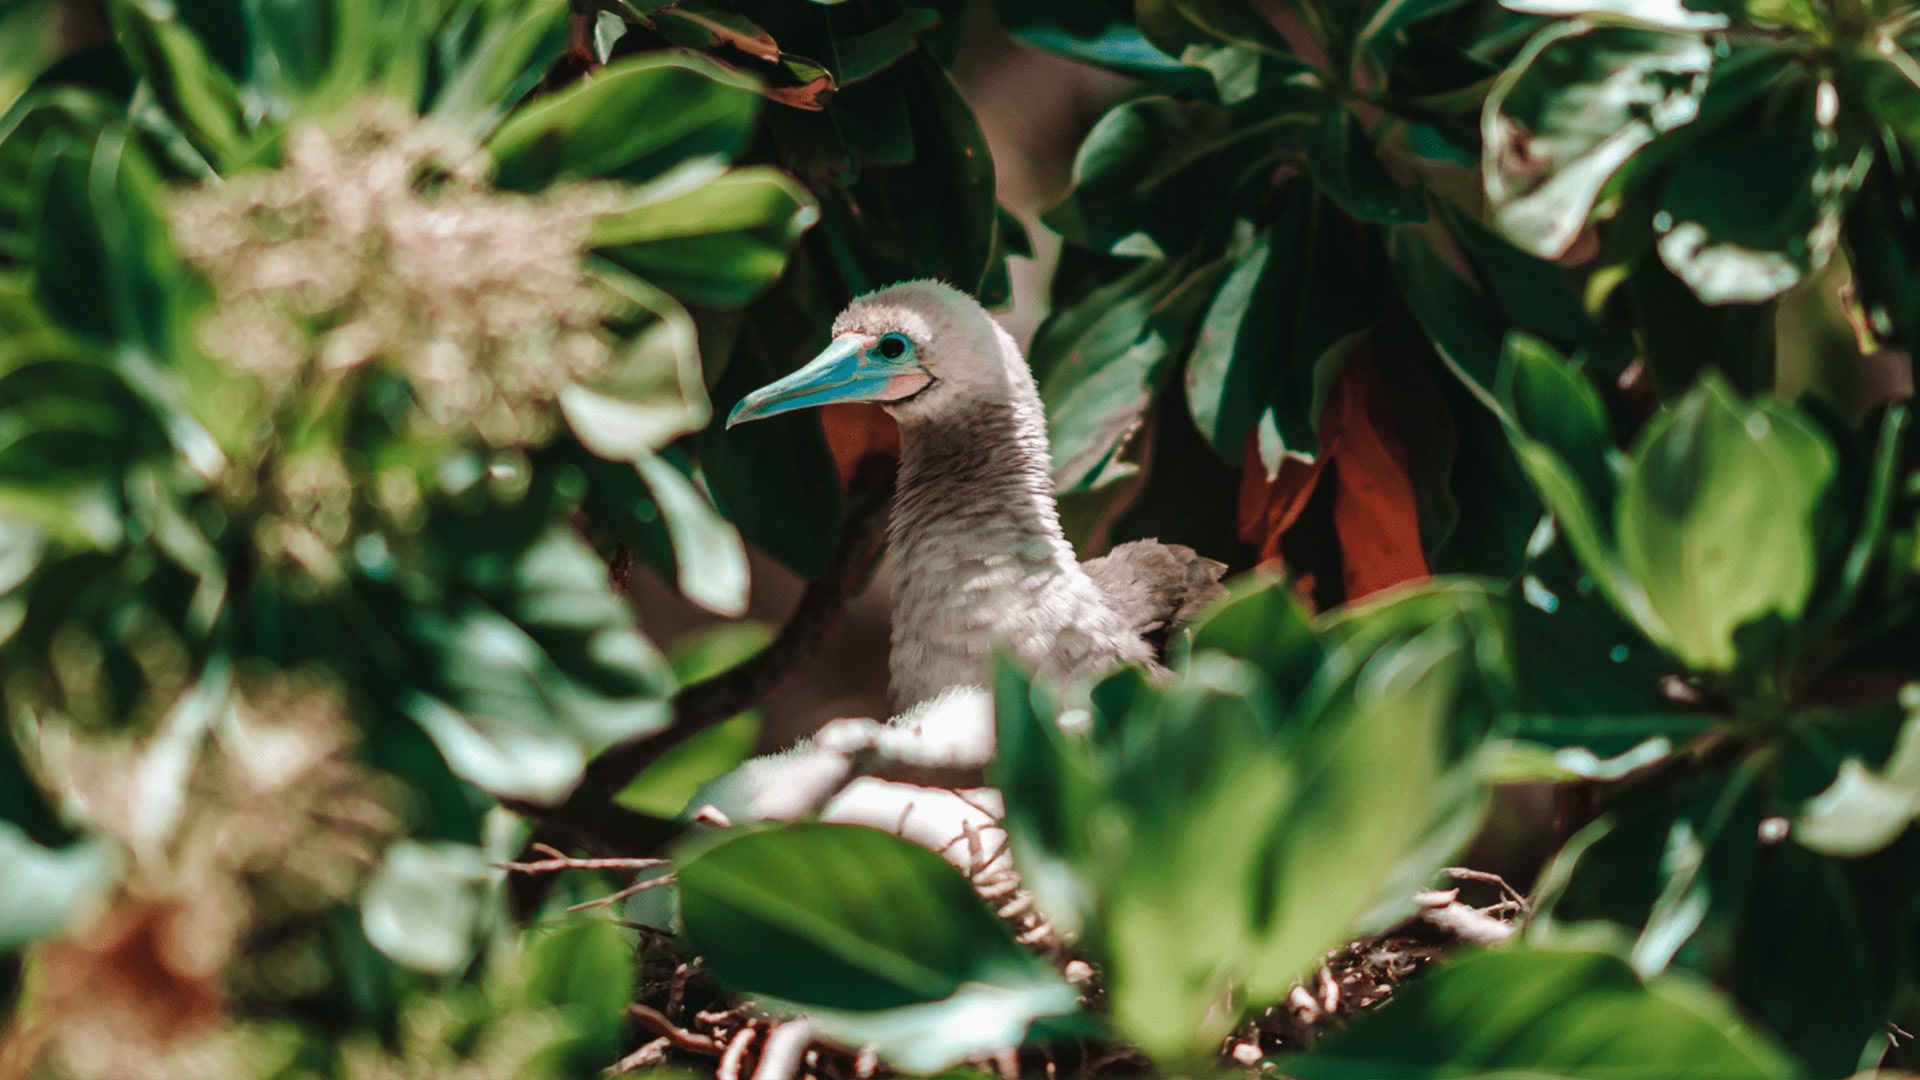 Tropical bird in the vegetation